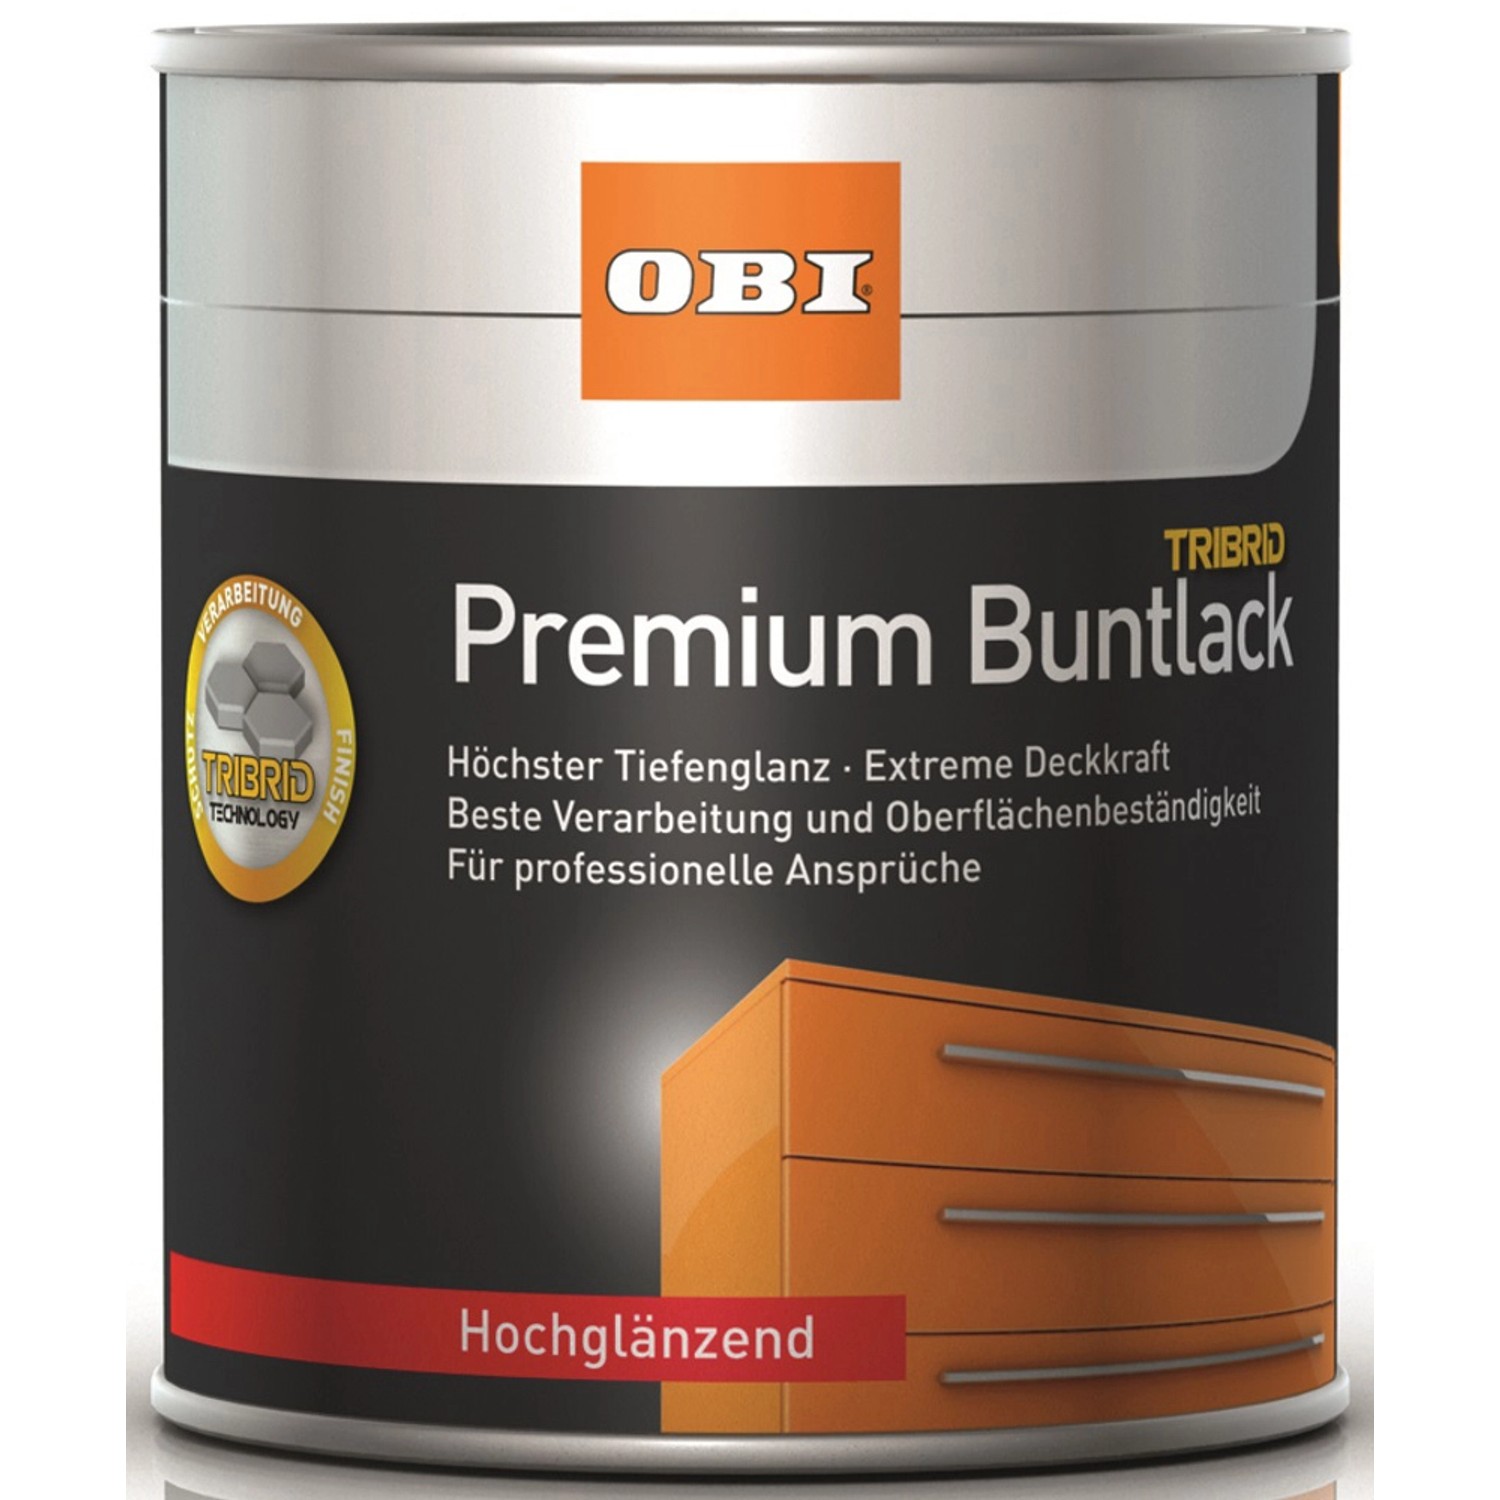 OBI Premium Buntlack Tribrid Rubinrot hochglänzend 375 ml